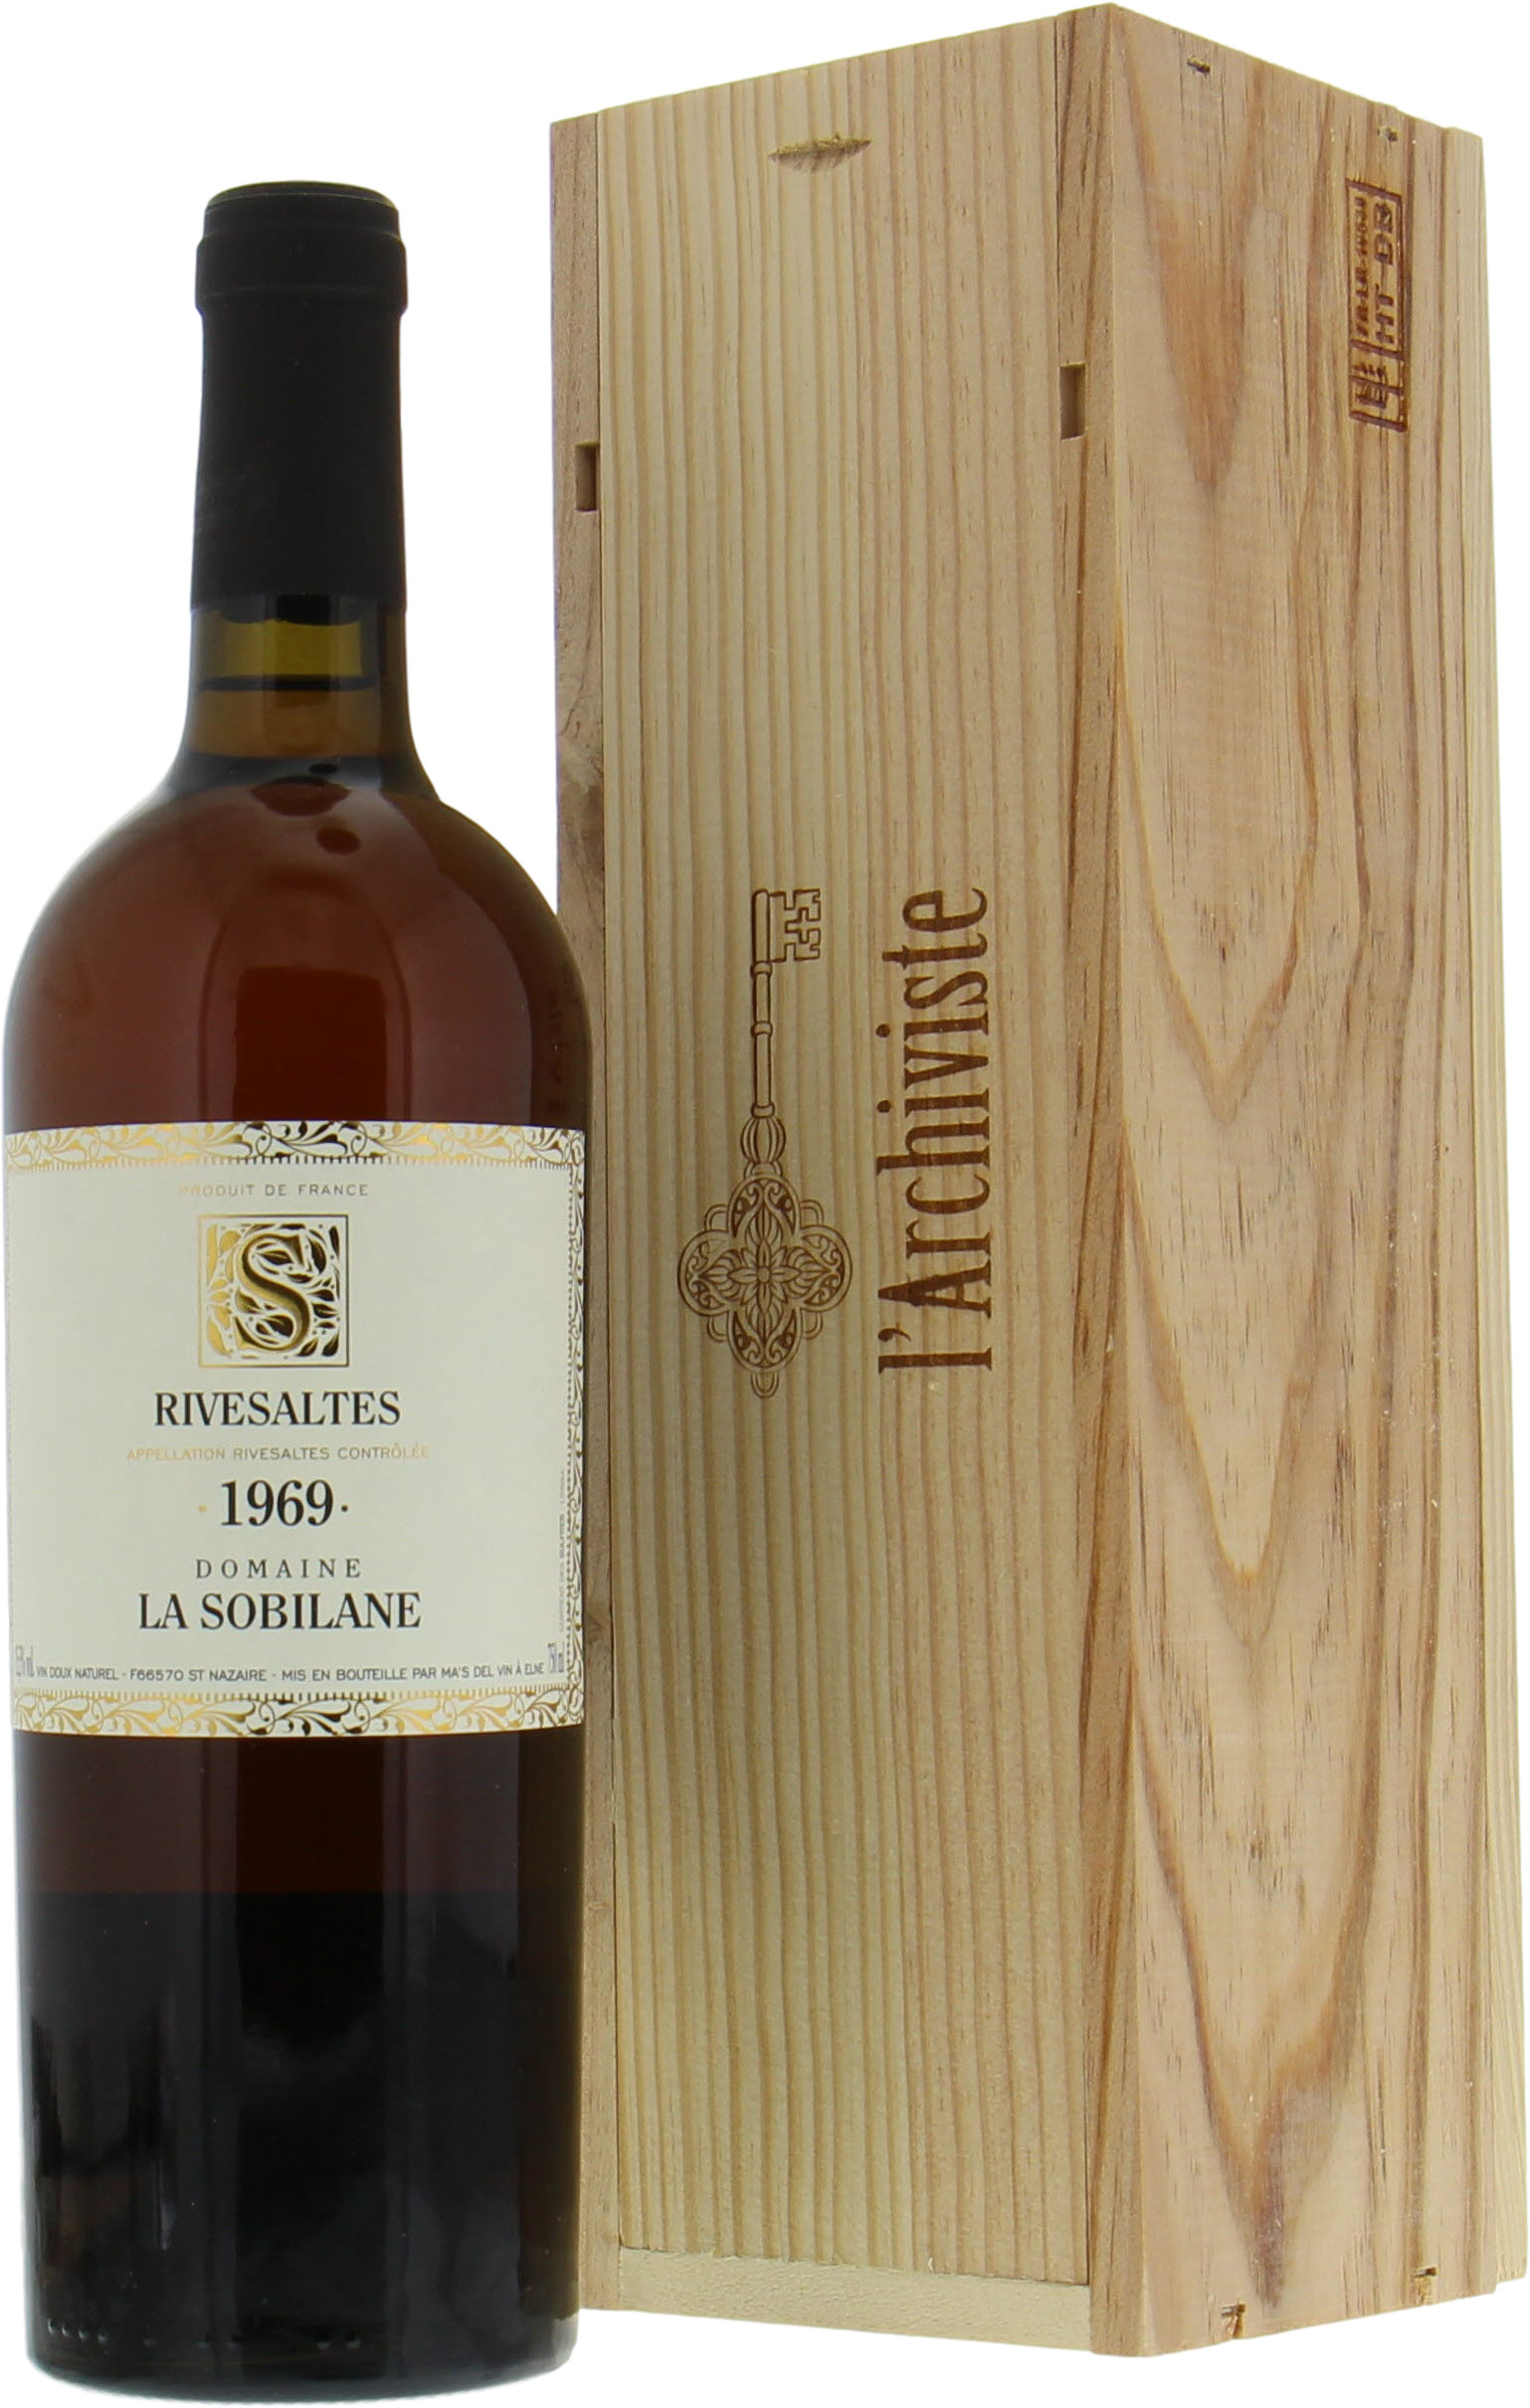 Domaine La Sobilane - Rivesaltes 1969 From Original Wooden Case